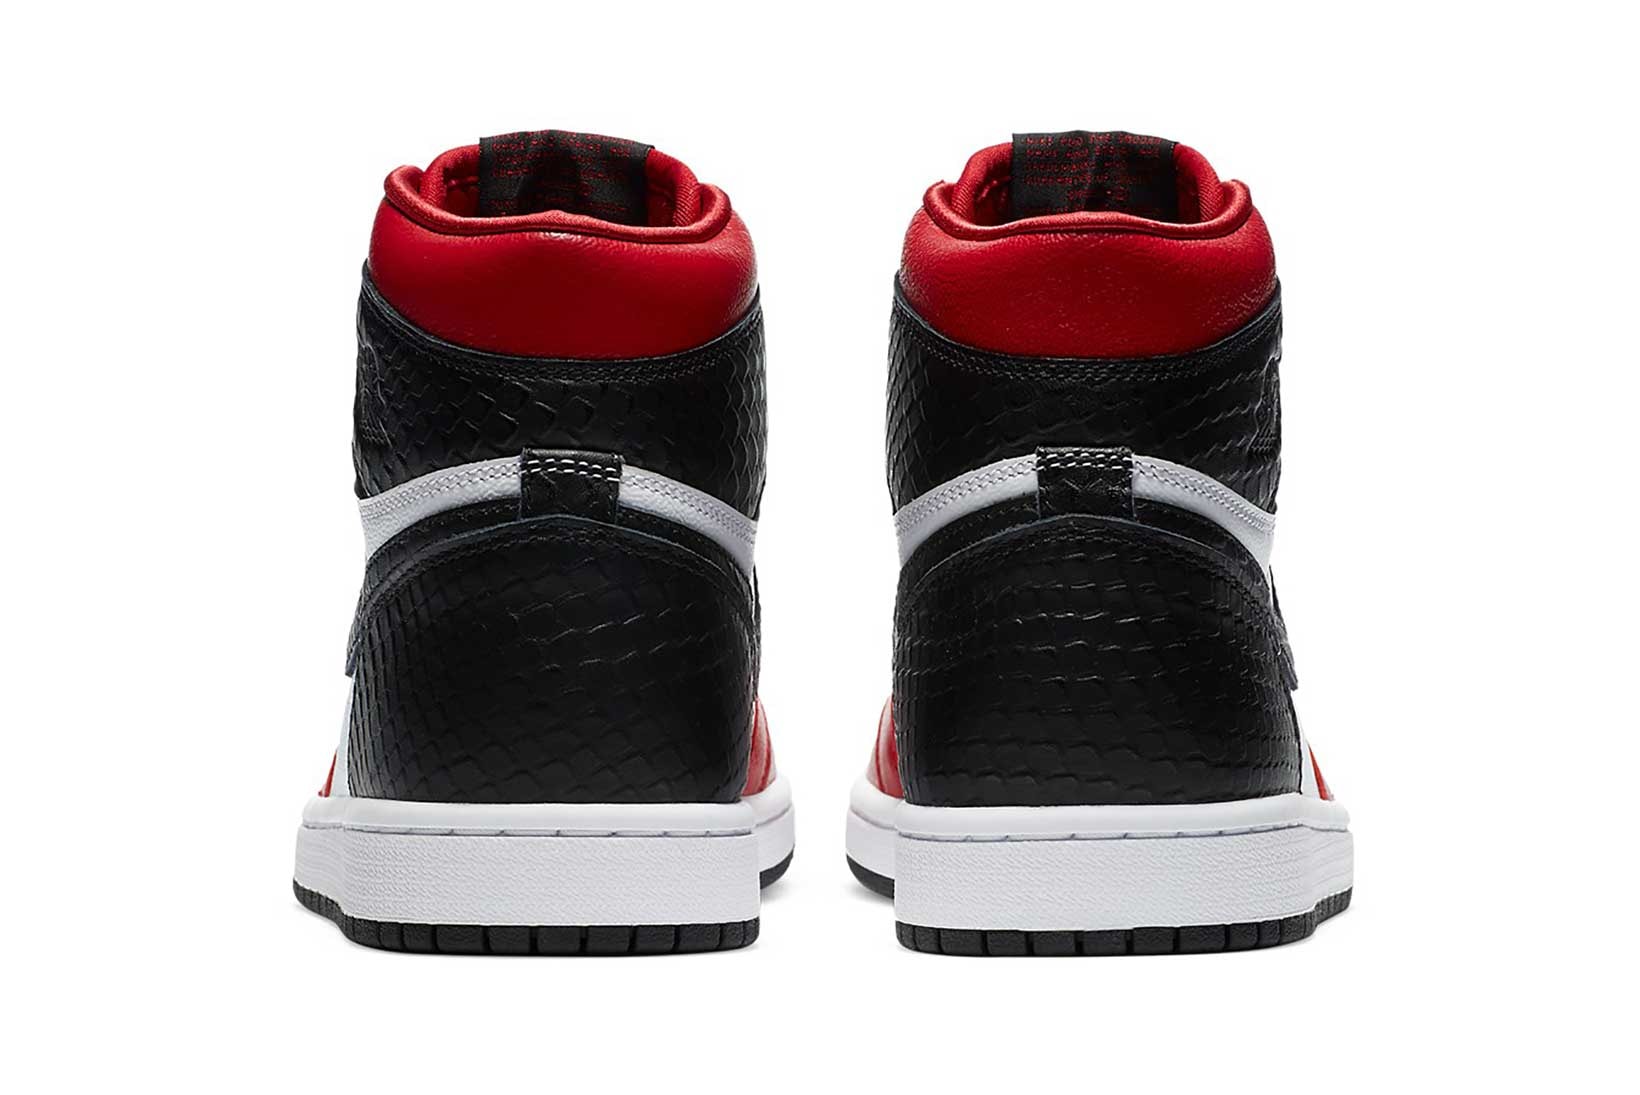 nike air jordan 1 retro high og womens sneakers black red white satin snake sneakerhead shoes footwear